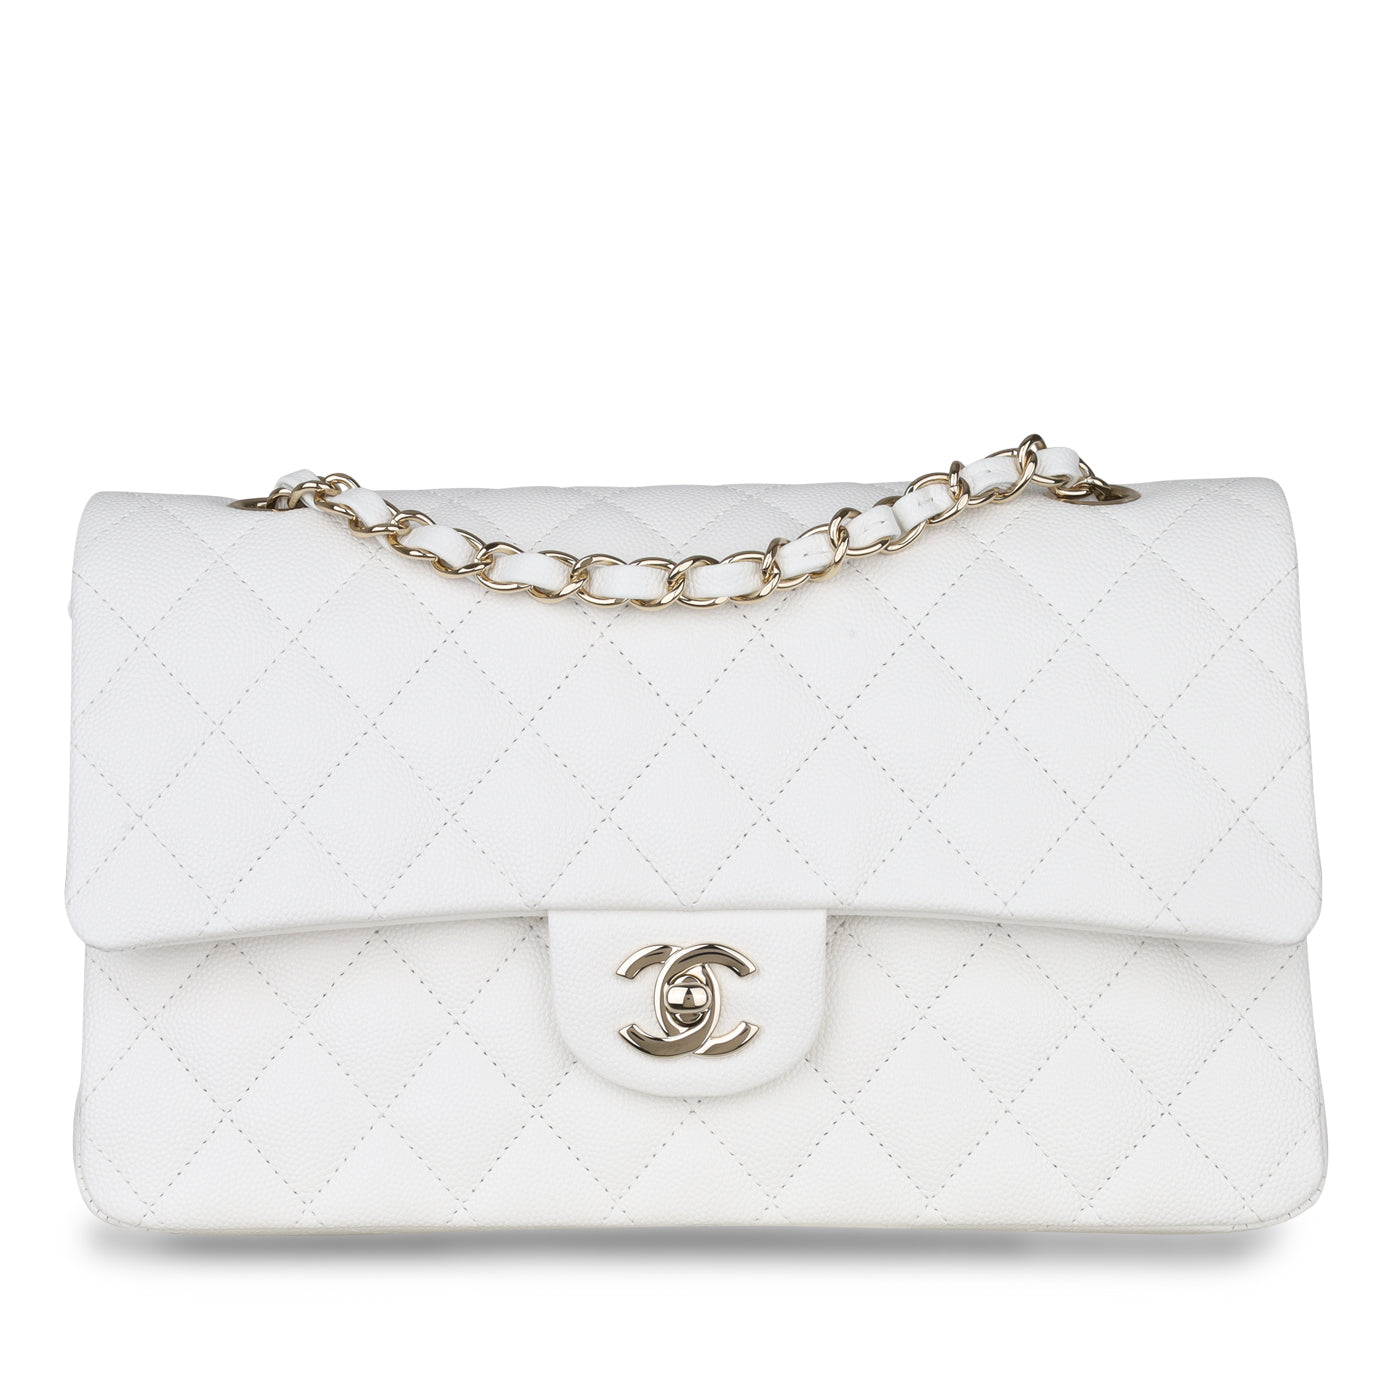 Chanel Medium Classic Flap - White Caviar - CGHW - Brand New